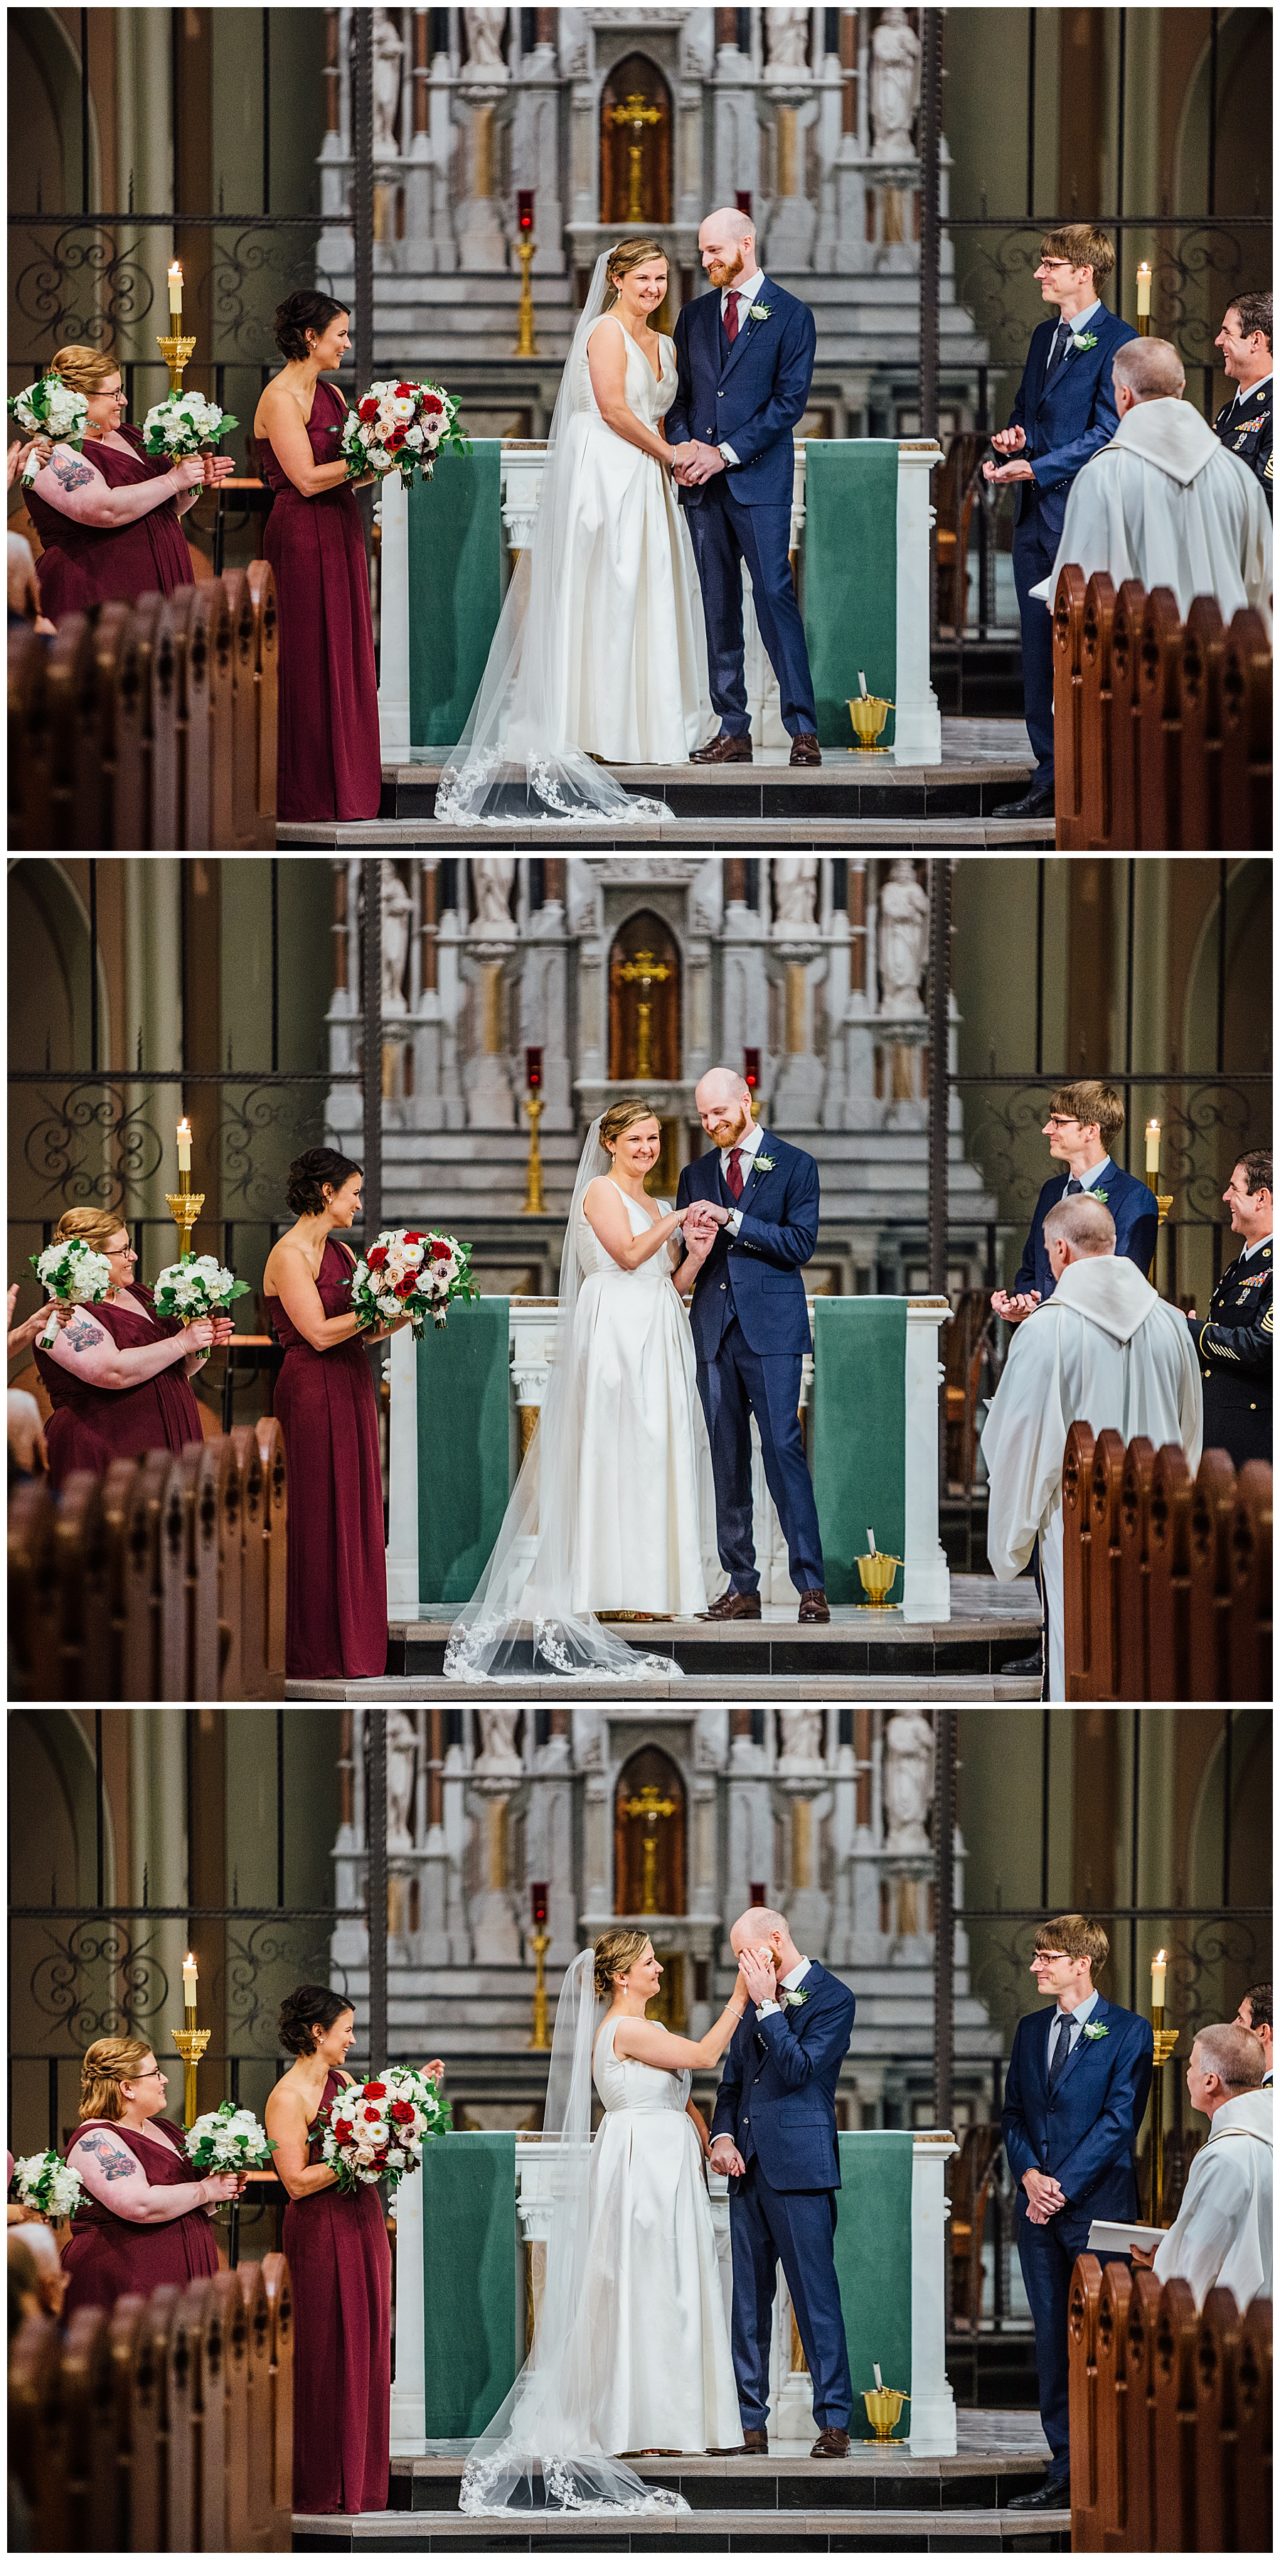 Wedding ceremony at St. John's Catholic Church